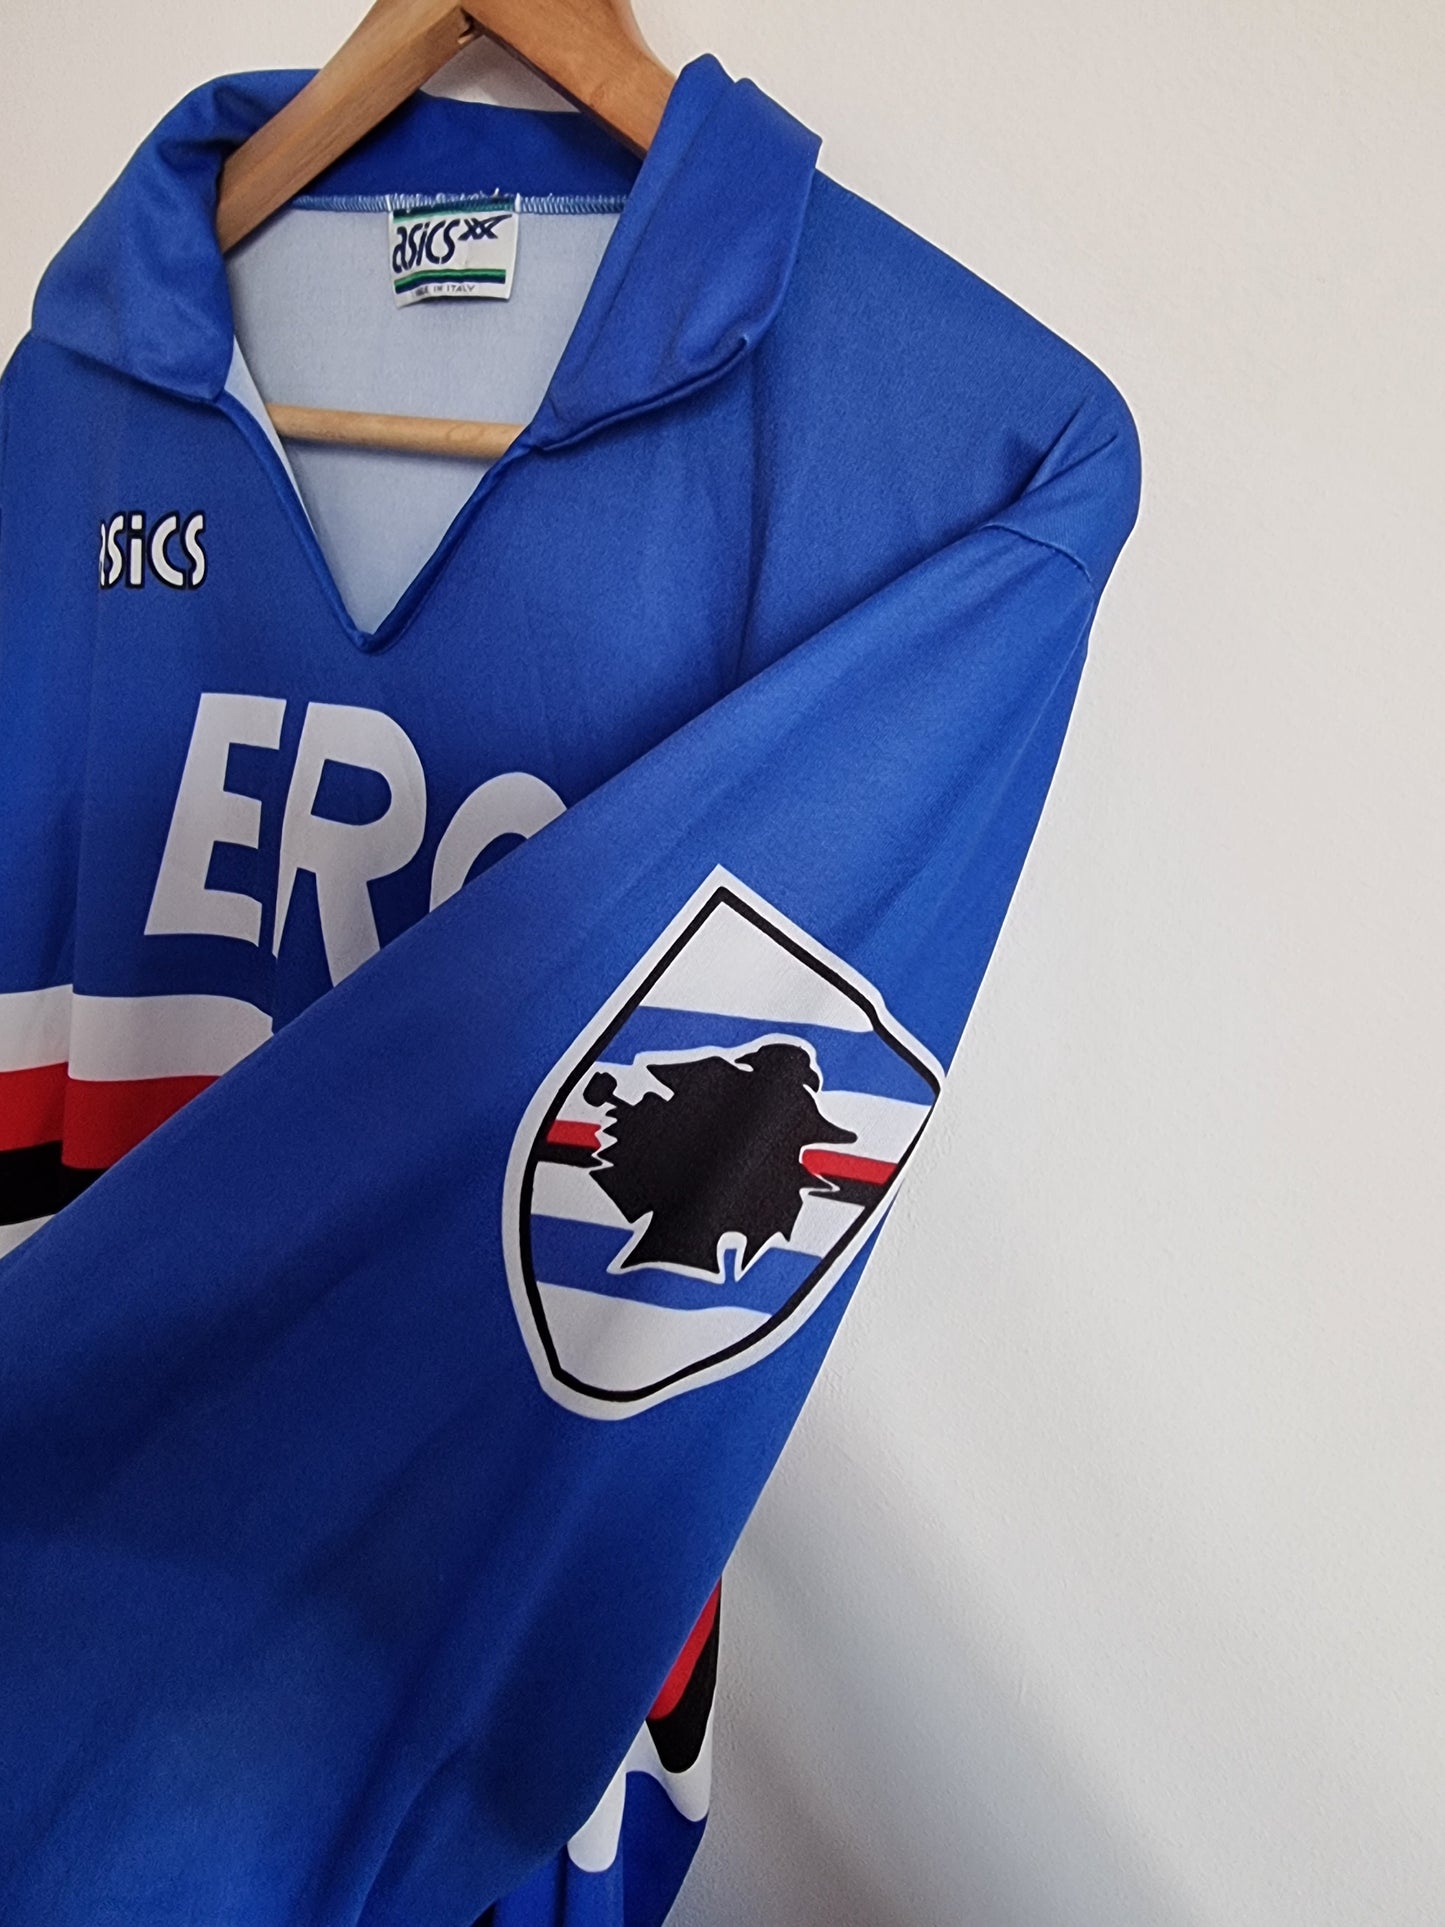 Asics Sampdoria 90/91 Long Sleeve Home Shirt XL